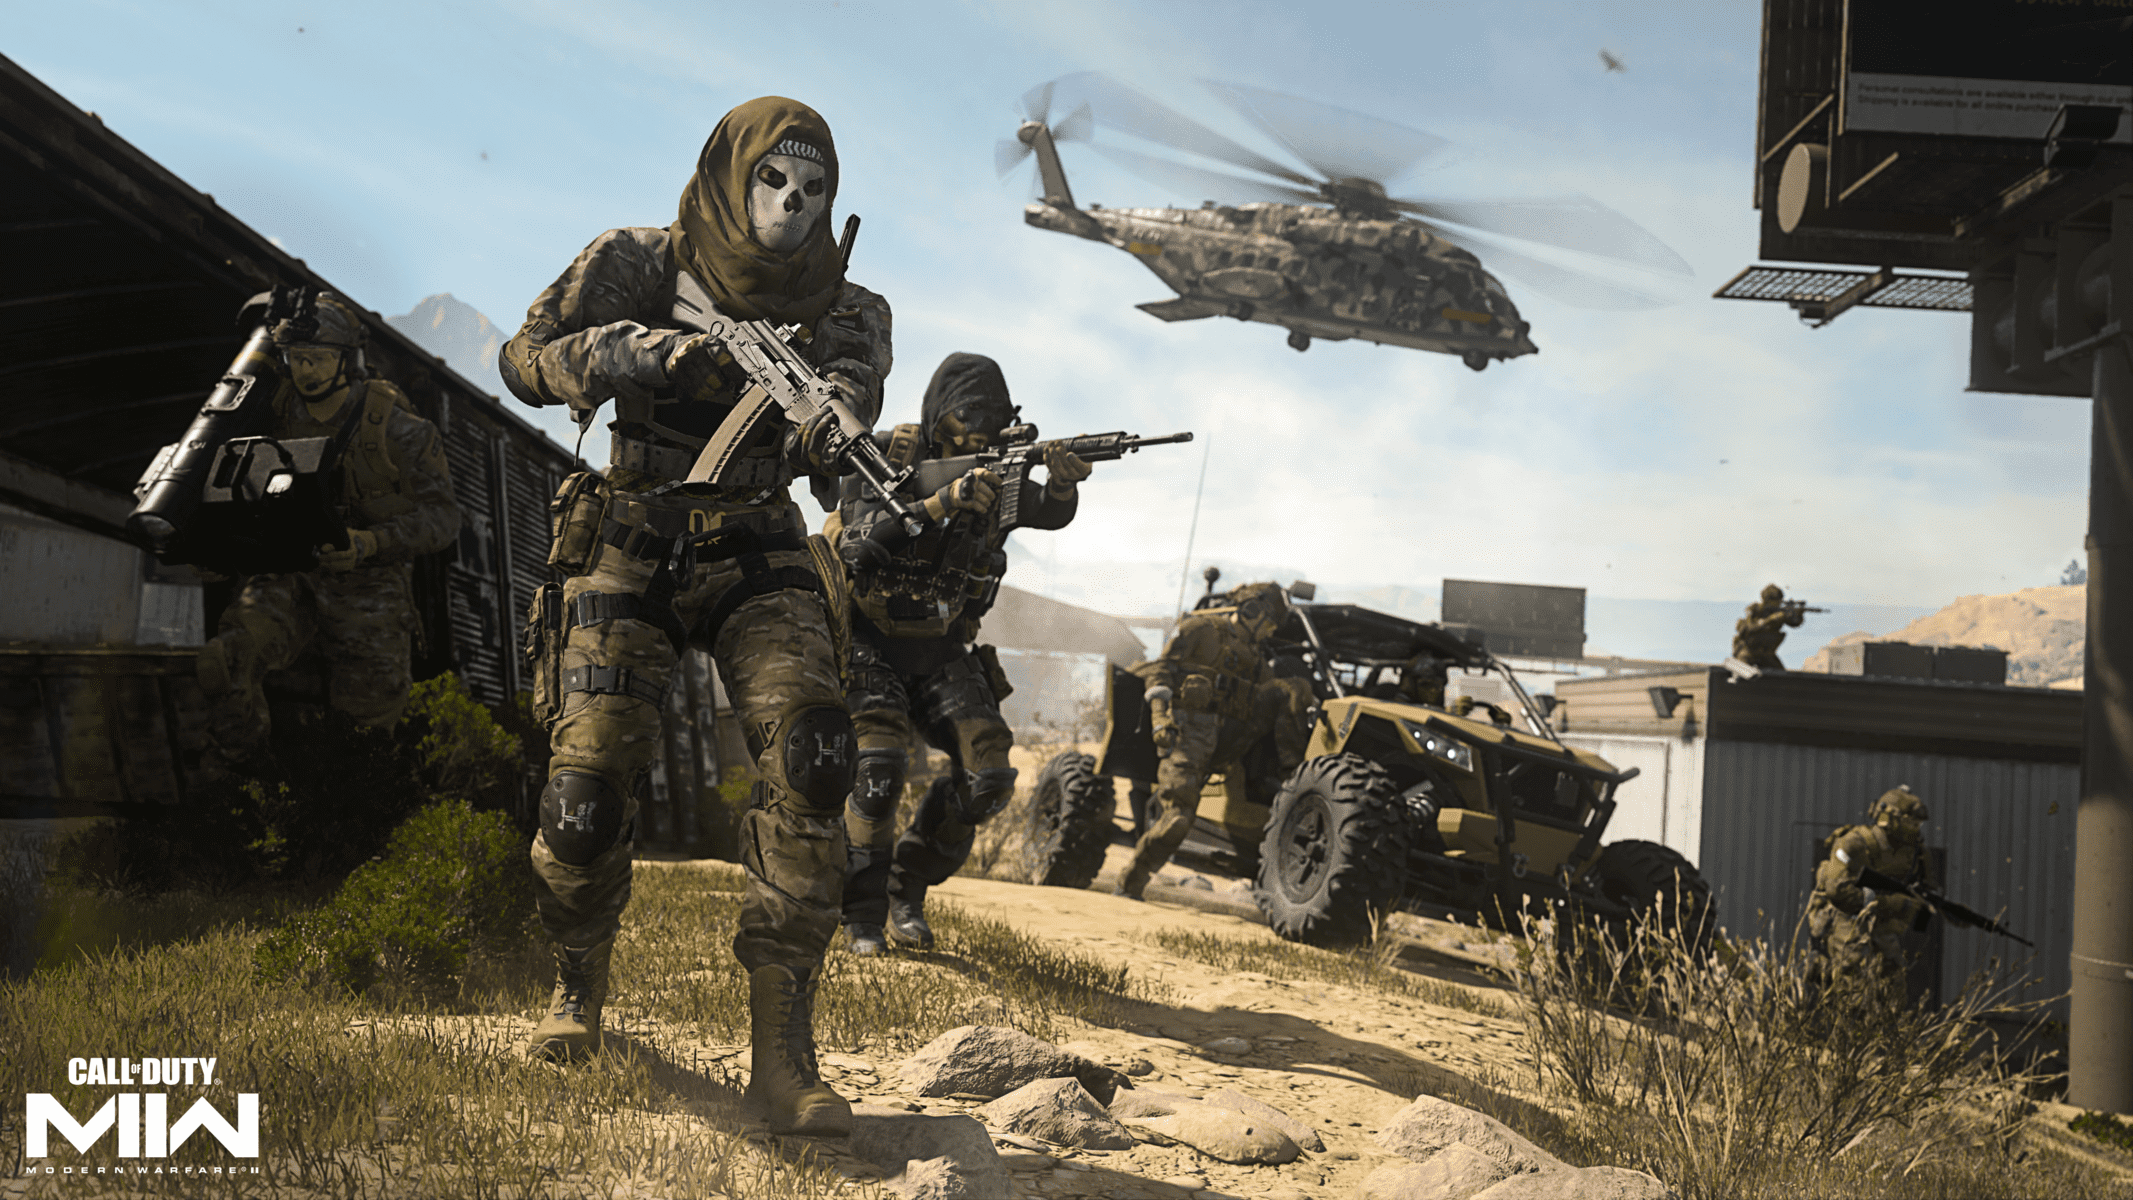 How to Unlock Guns in MW2 – here’s how you can unlock new guns in Modern Warfare 2